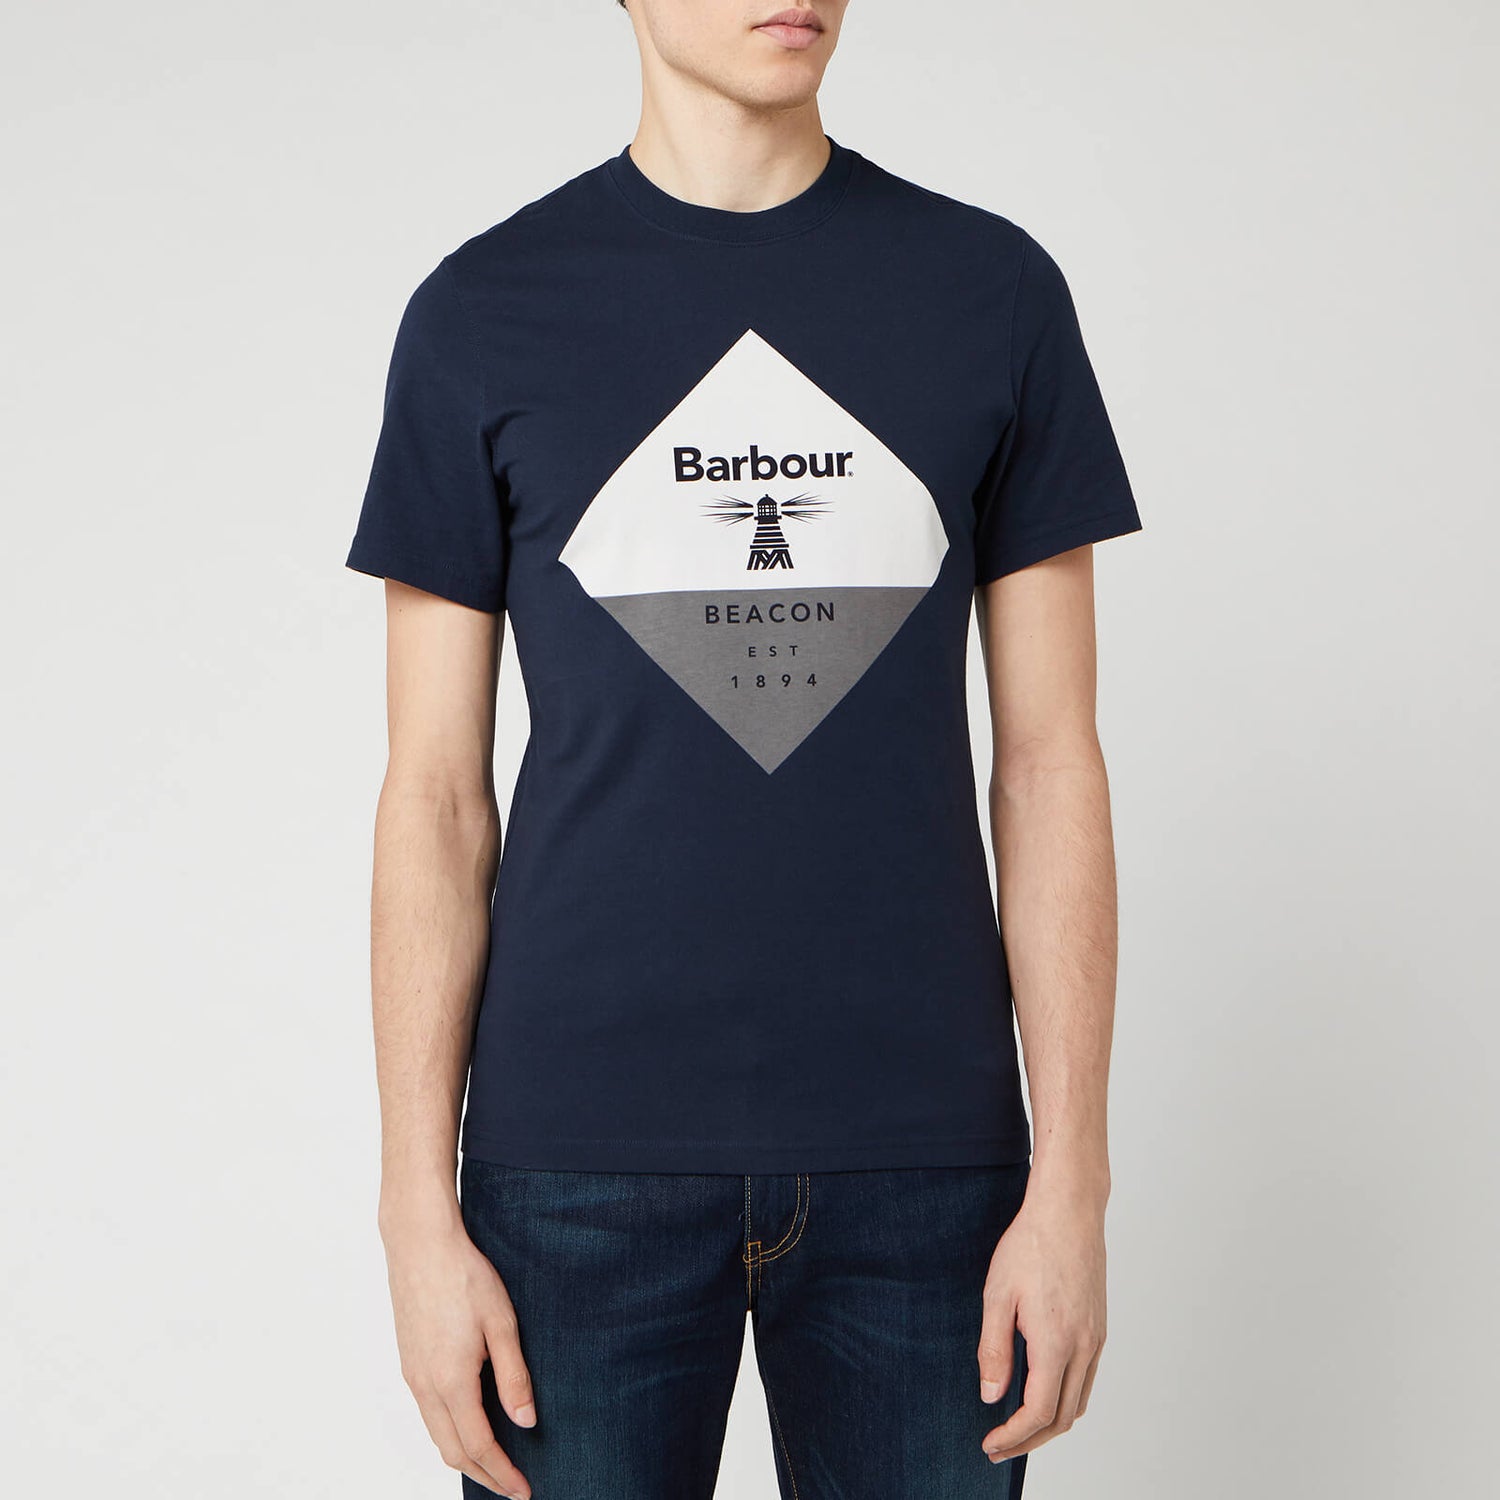 Barbour Beacon Men's Diamond T-Shirt - Navy - S